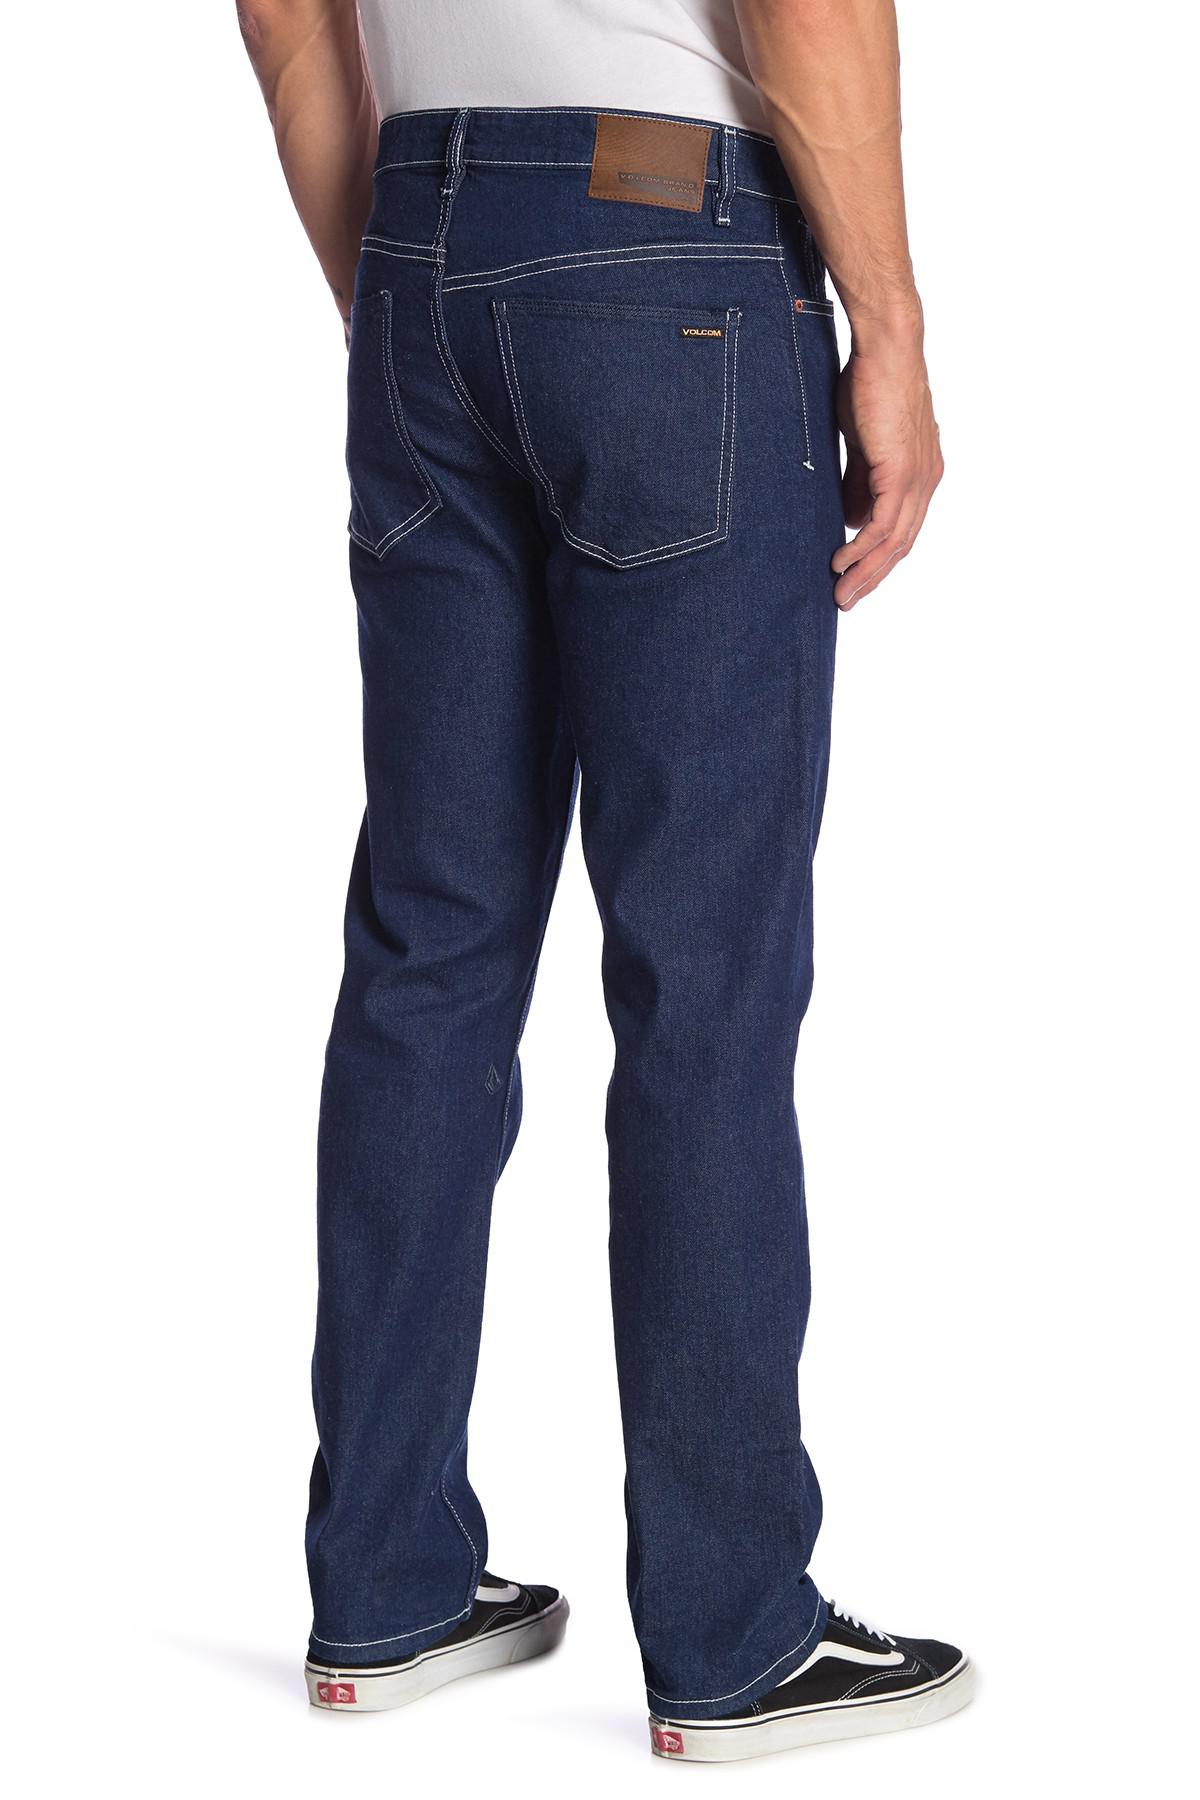 Lyst - Volcom Solver Modern Straight Jeans - 30-34